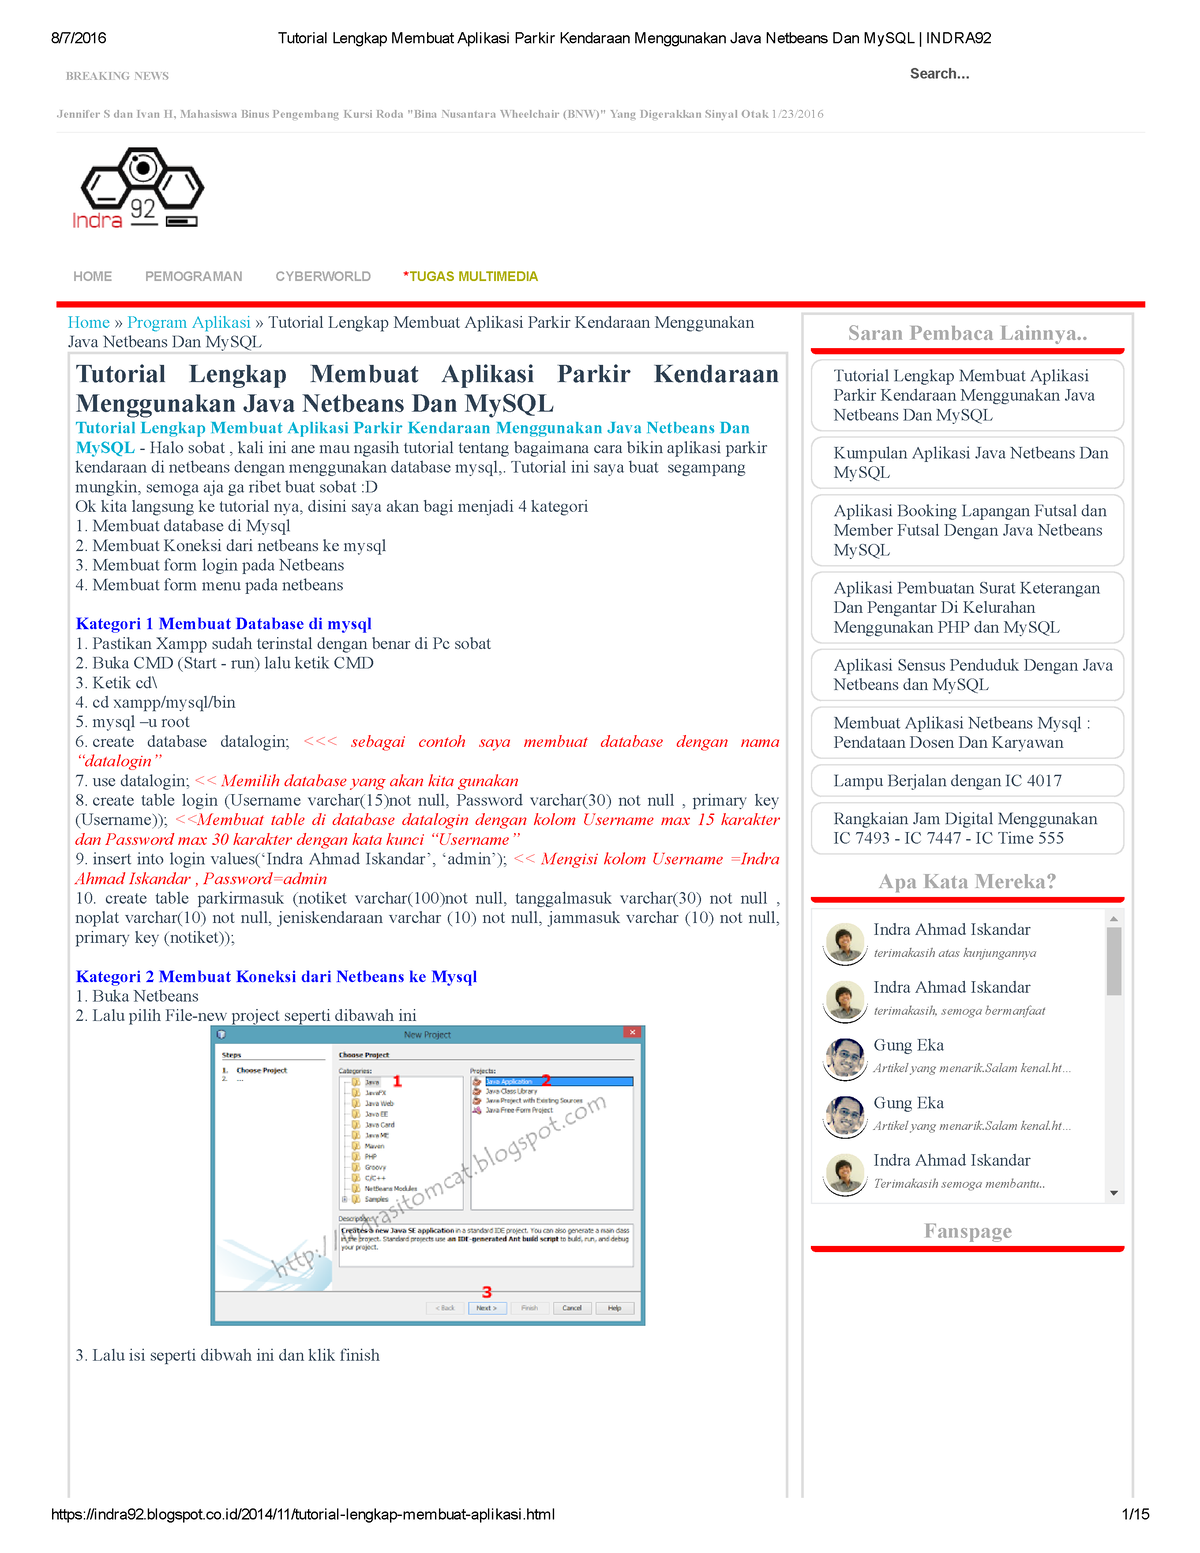 Tutorial Lengkap Membuat Aplikasi Parkir Kendaraan Menggunakan Java Netbeans Dan My Sql Indra 92 9291